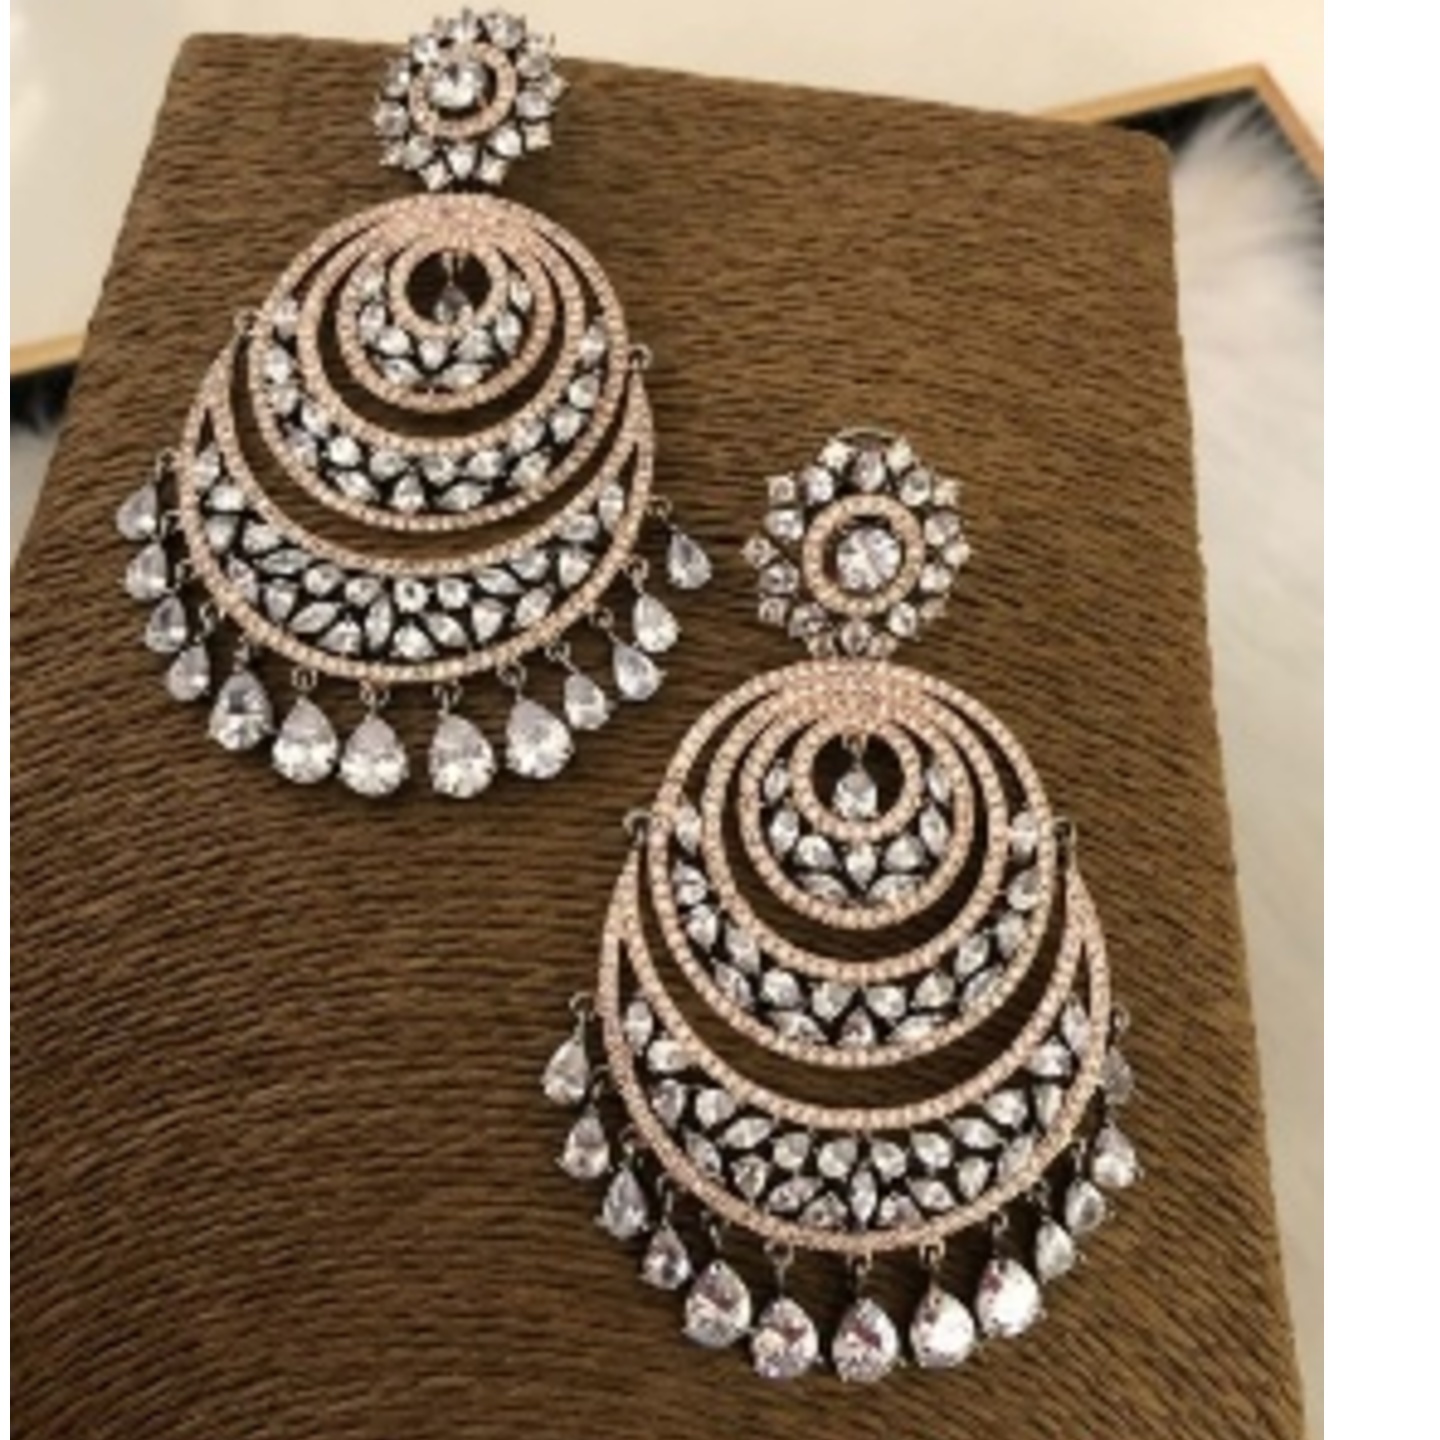 American Diamond Earrings with Ad  Danglers in Roae Gold